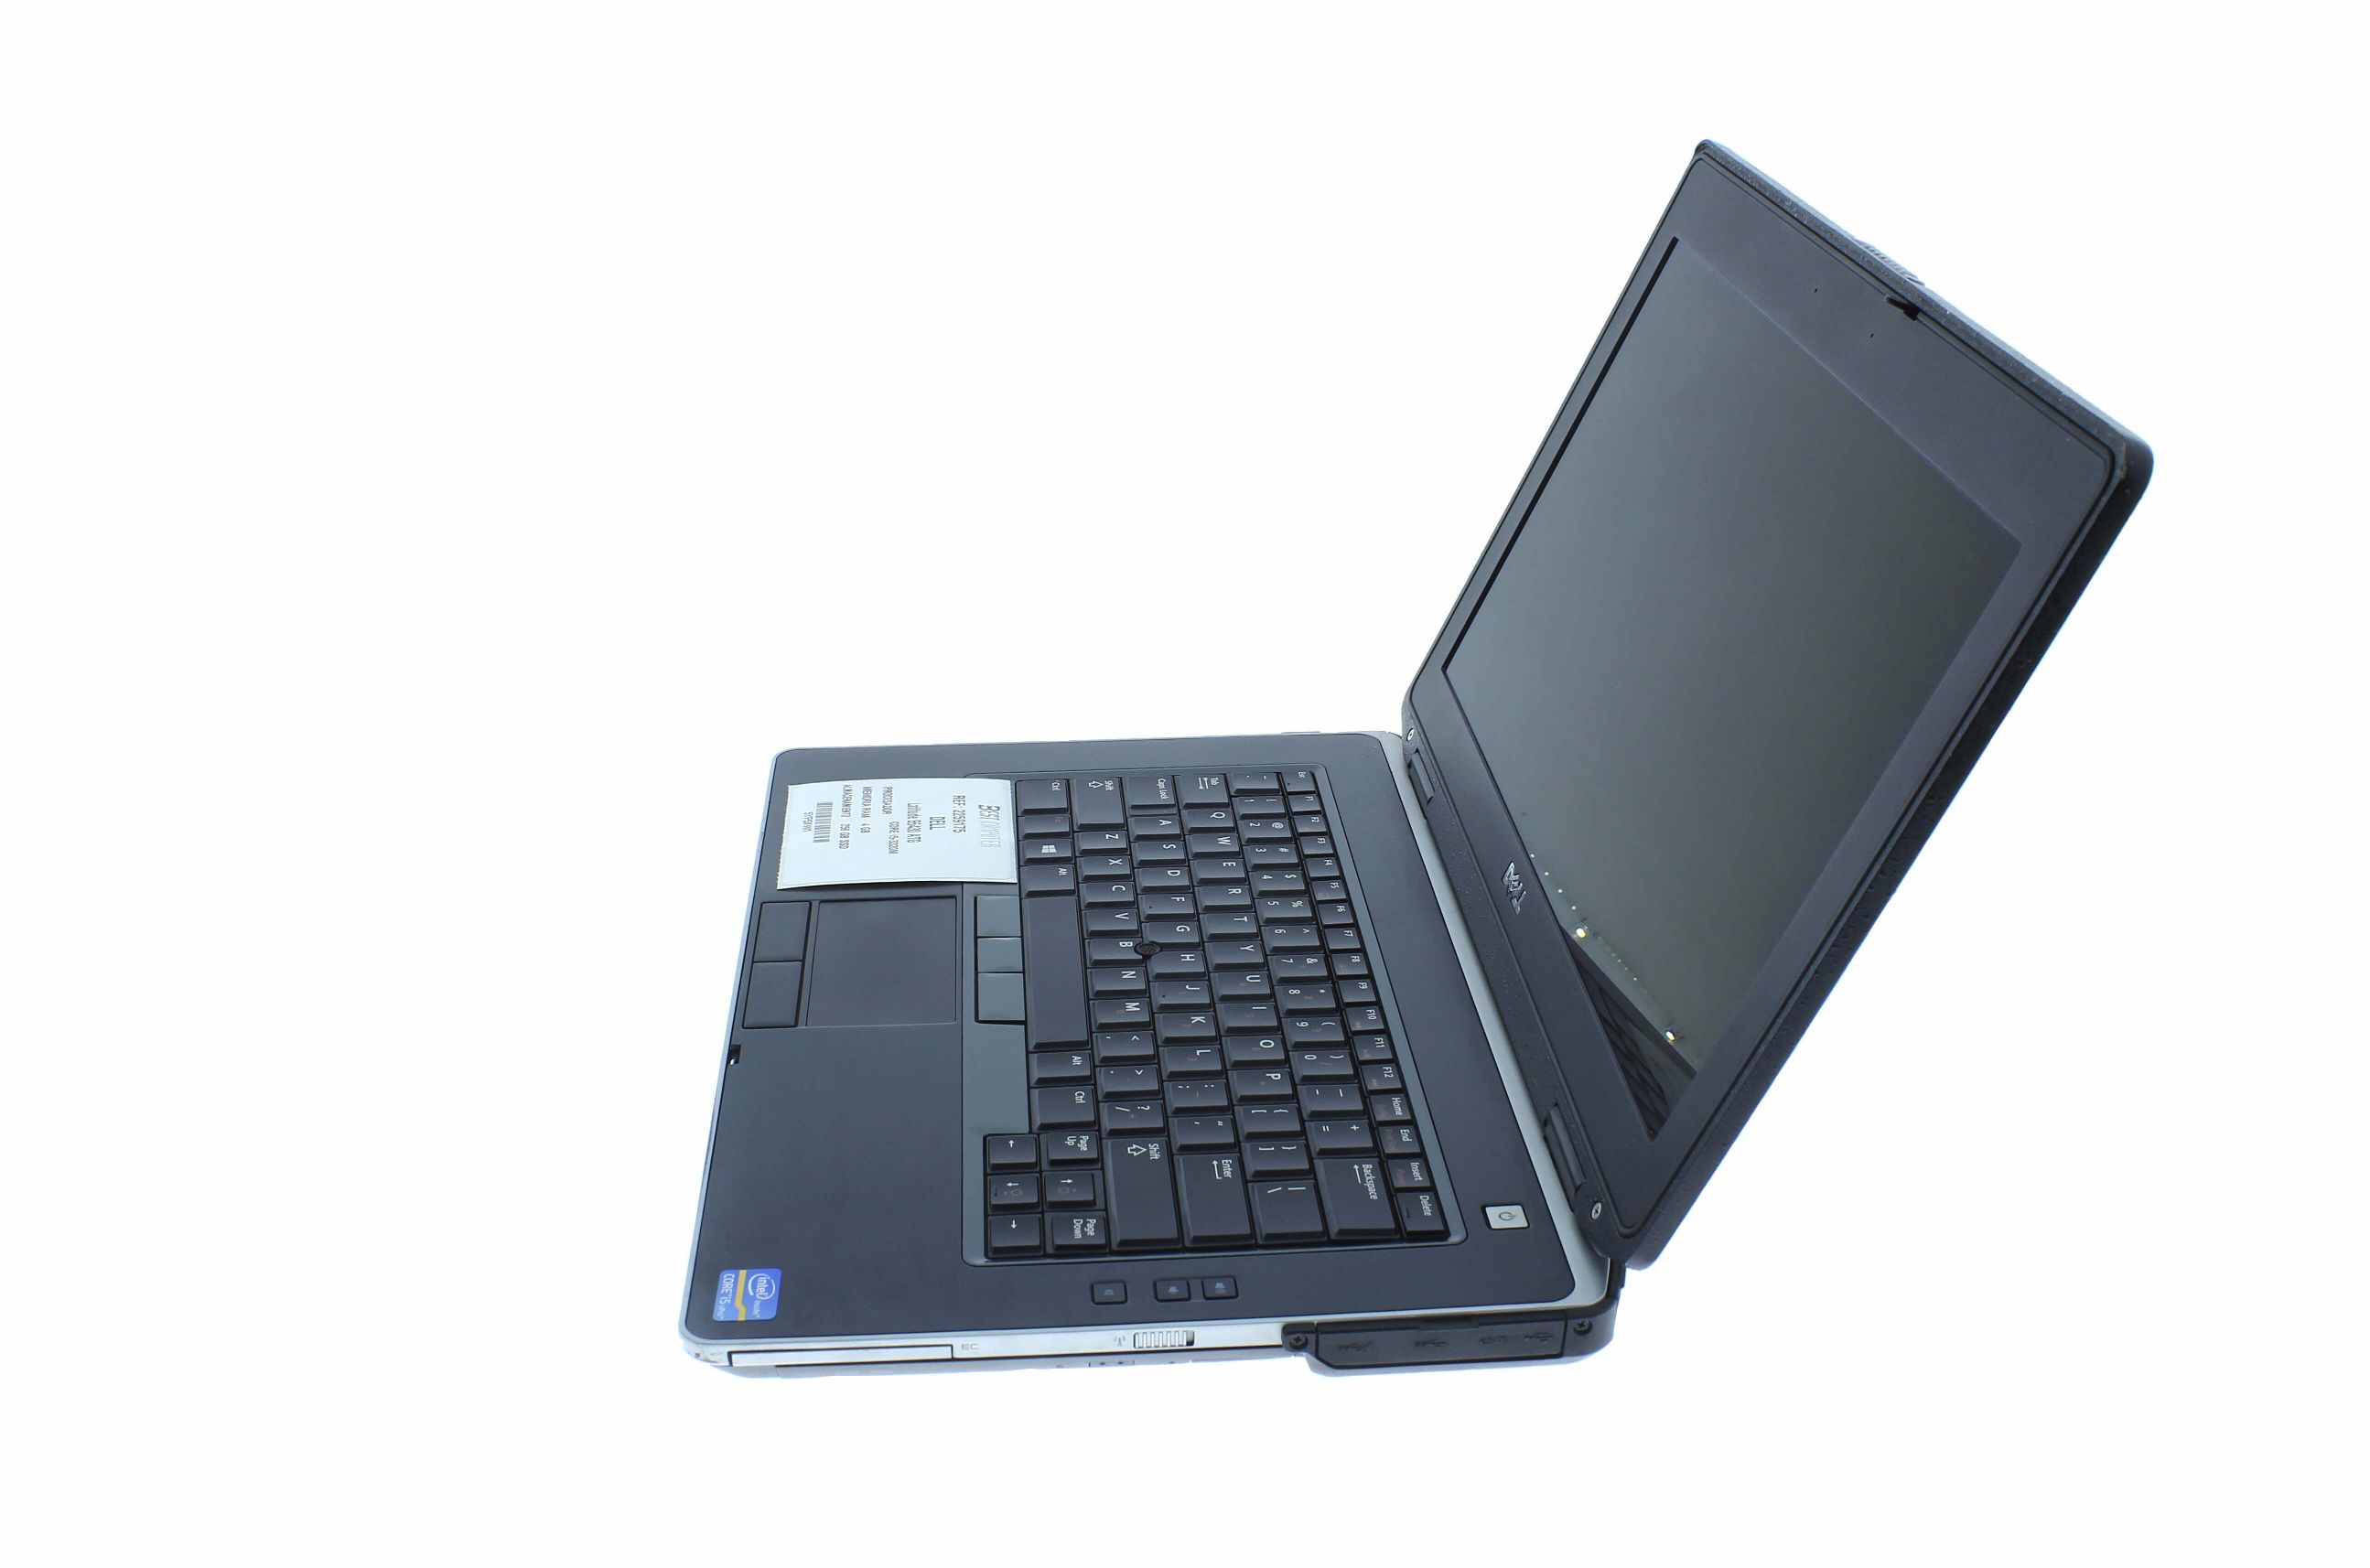 Laptop Dell Latitude E6430, Procesador  Core™i5-3320M 2.6GHz, 3th Gen,  Ram 8Gb, Disco duro 500Gb HDD, Display 14",  con DVD-RW, Windows 10 64 bits,  Renovada,  garantia 1 año